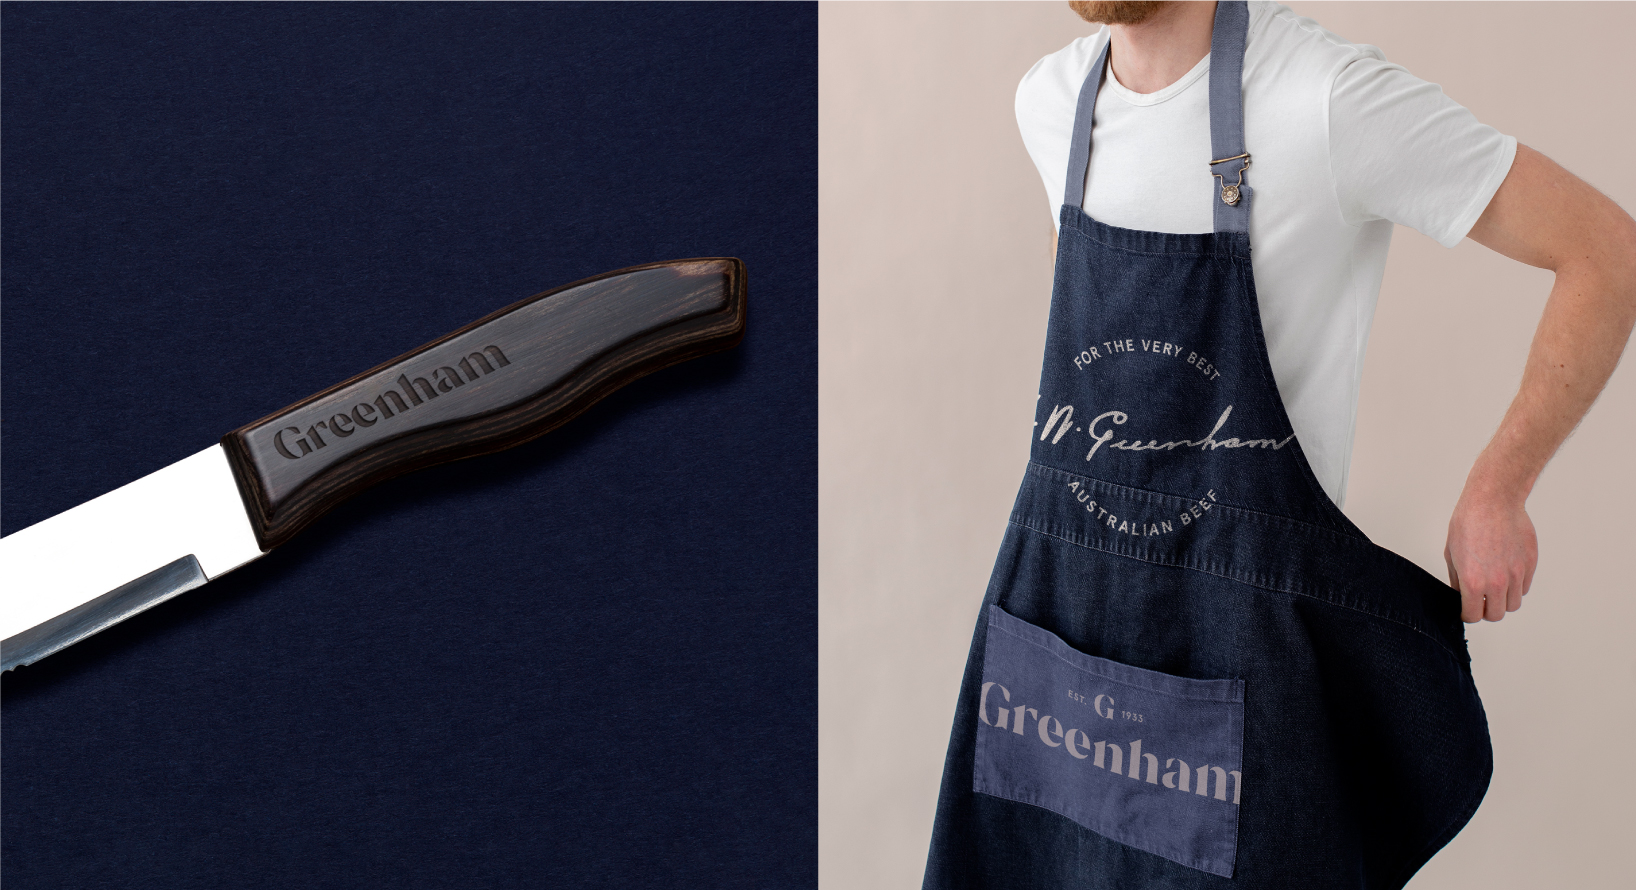 Greenham branded steak knife and apron